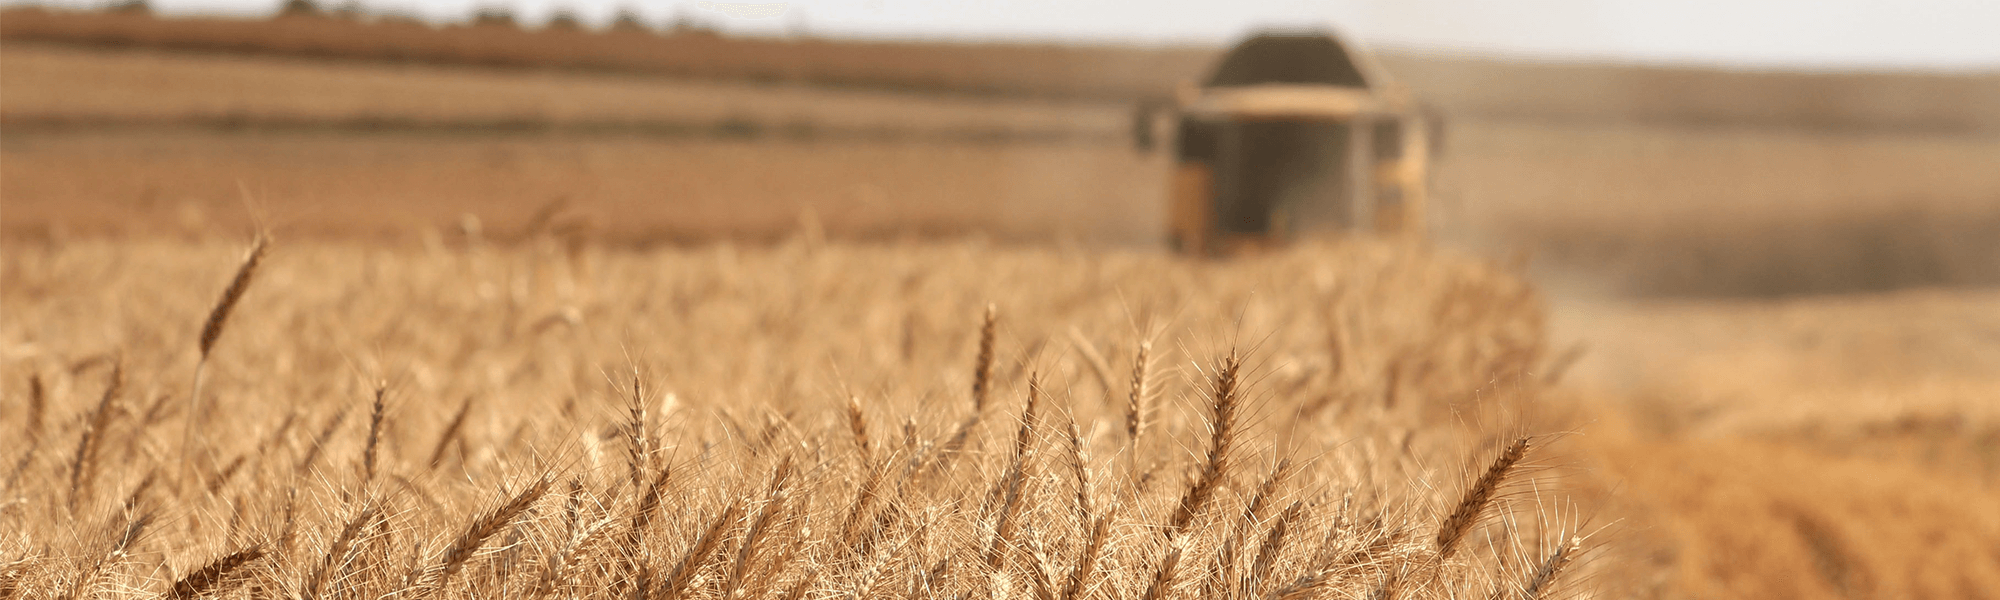 Wheat farming in Narrabri